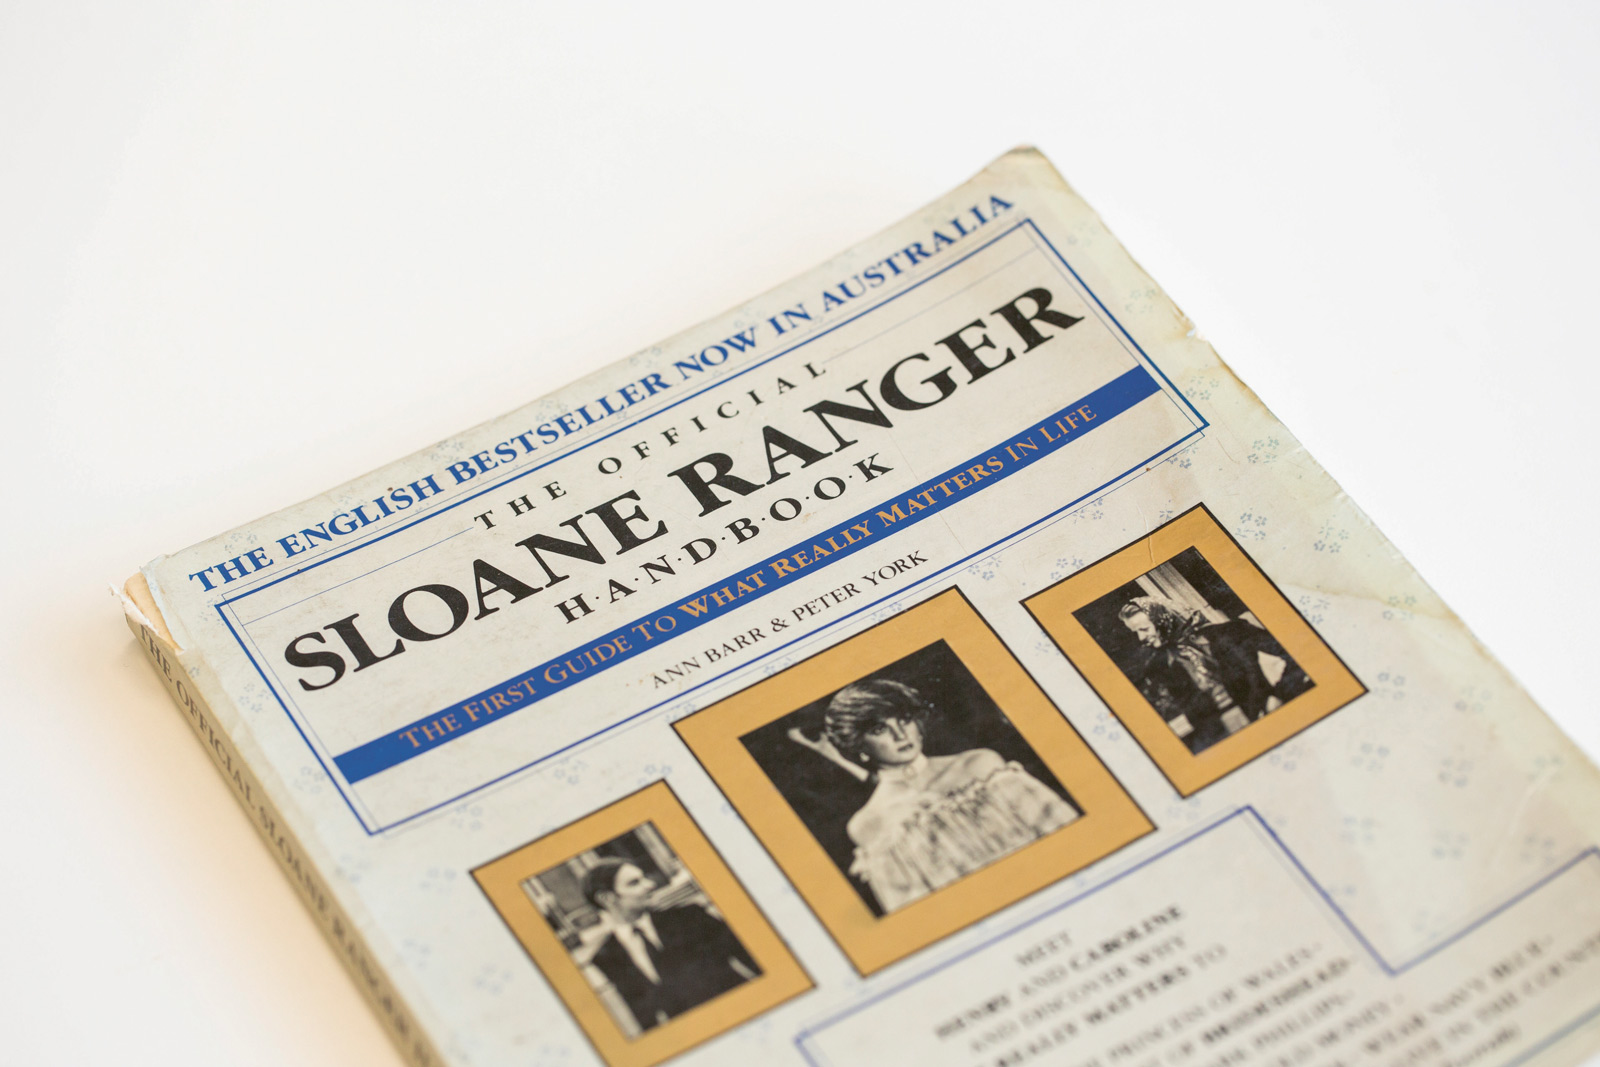 Handbook sloane ranger [PDF] OFFICIAL